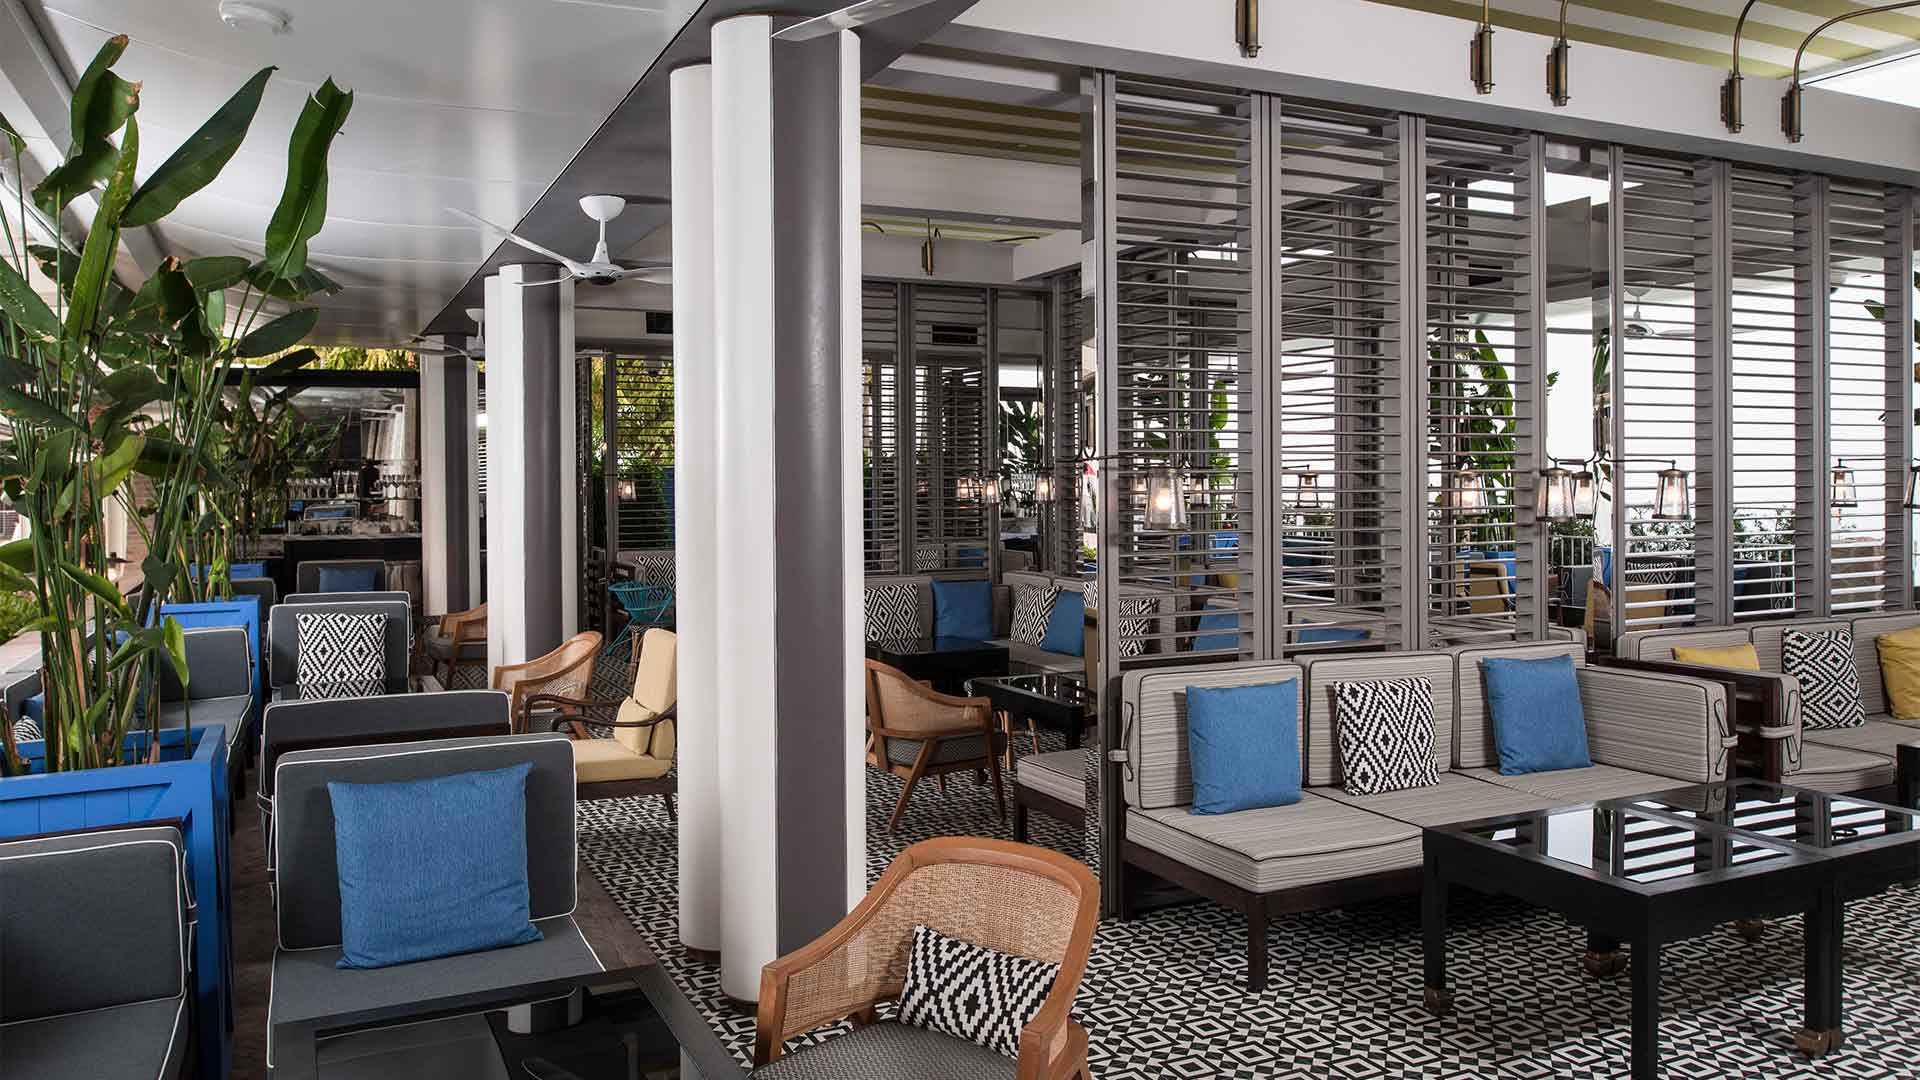 Area bersantap di teras Spago Bar & Lounge, tempat digelarnya acara bersantap privat